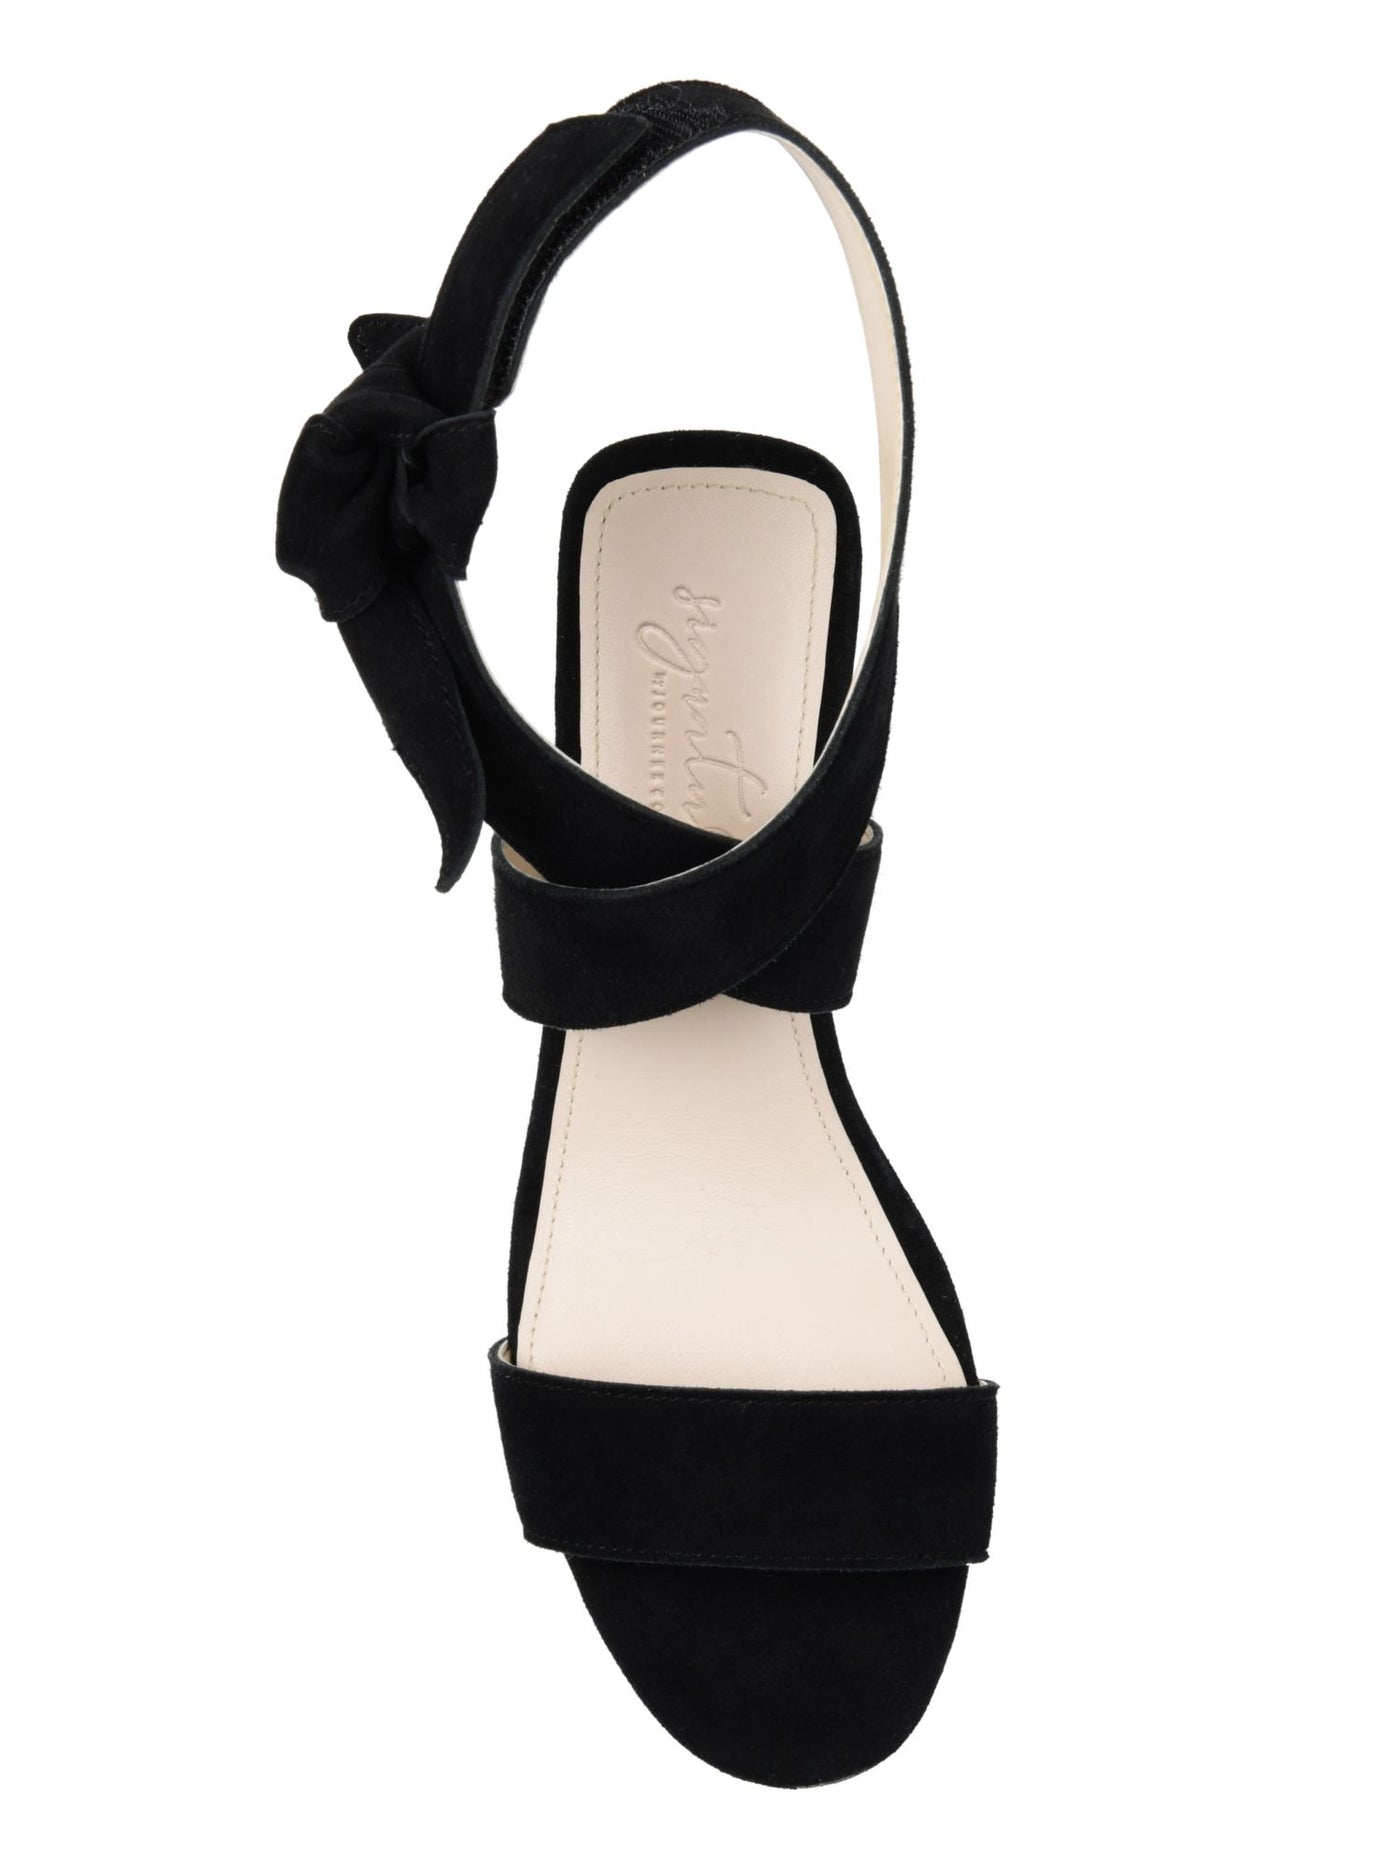 JOURNEE SIGNATURE Womens Black Cushioned Hether Open Toe Block Heel Leather Dress Heeled Sandal 8.5